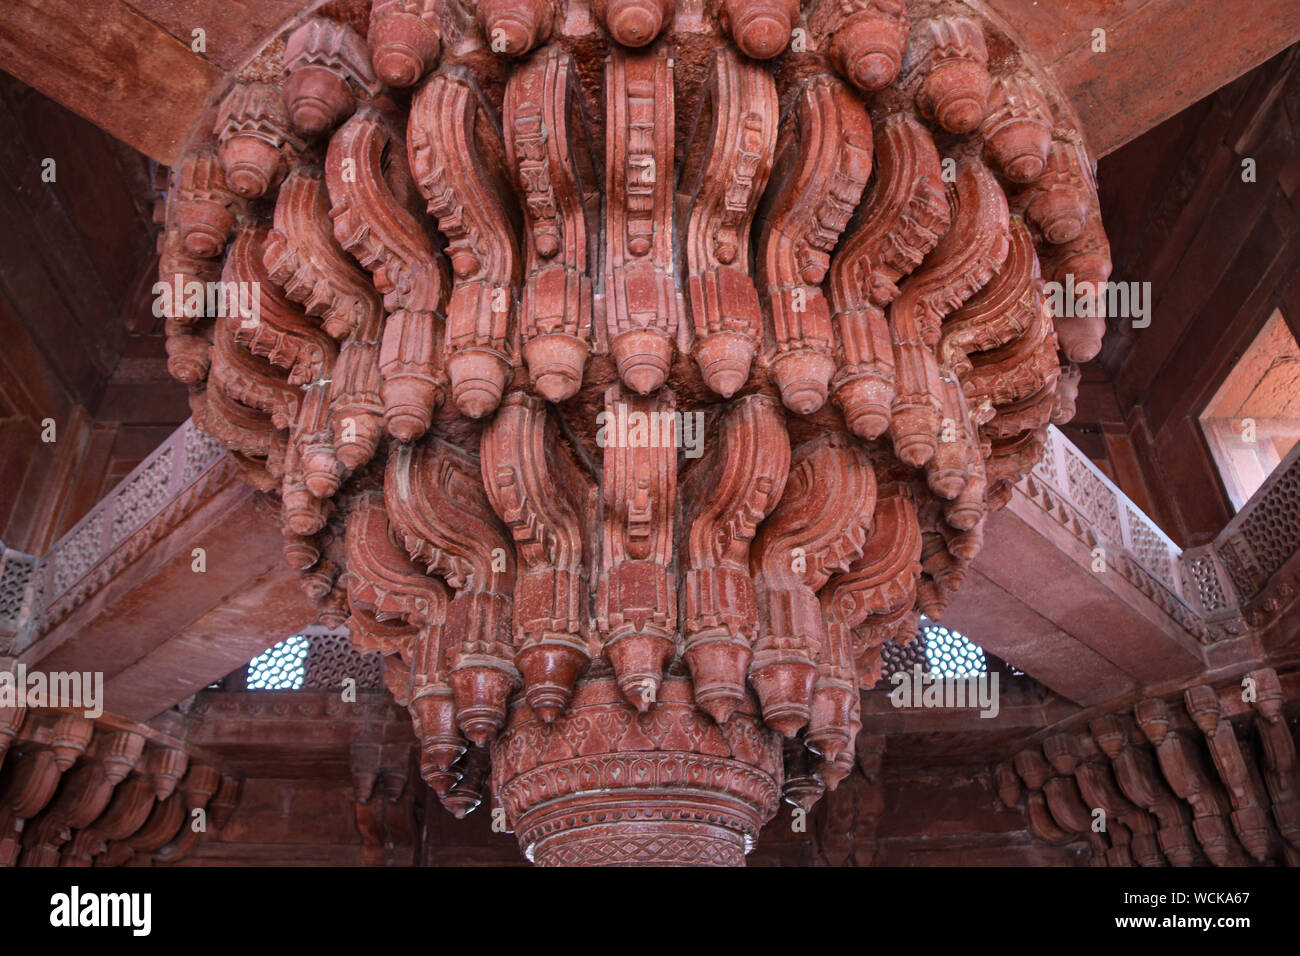 The famous central column supporting the Diwan-E-Khas (Diwan-i-khas), Fatehpur Sikri, Uttar Pradesh, India, Central Asia Stock Photo